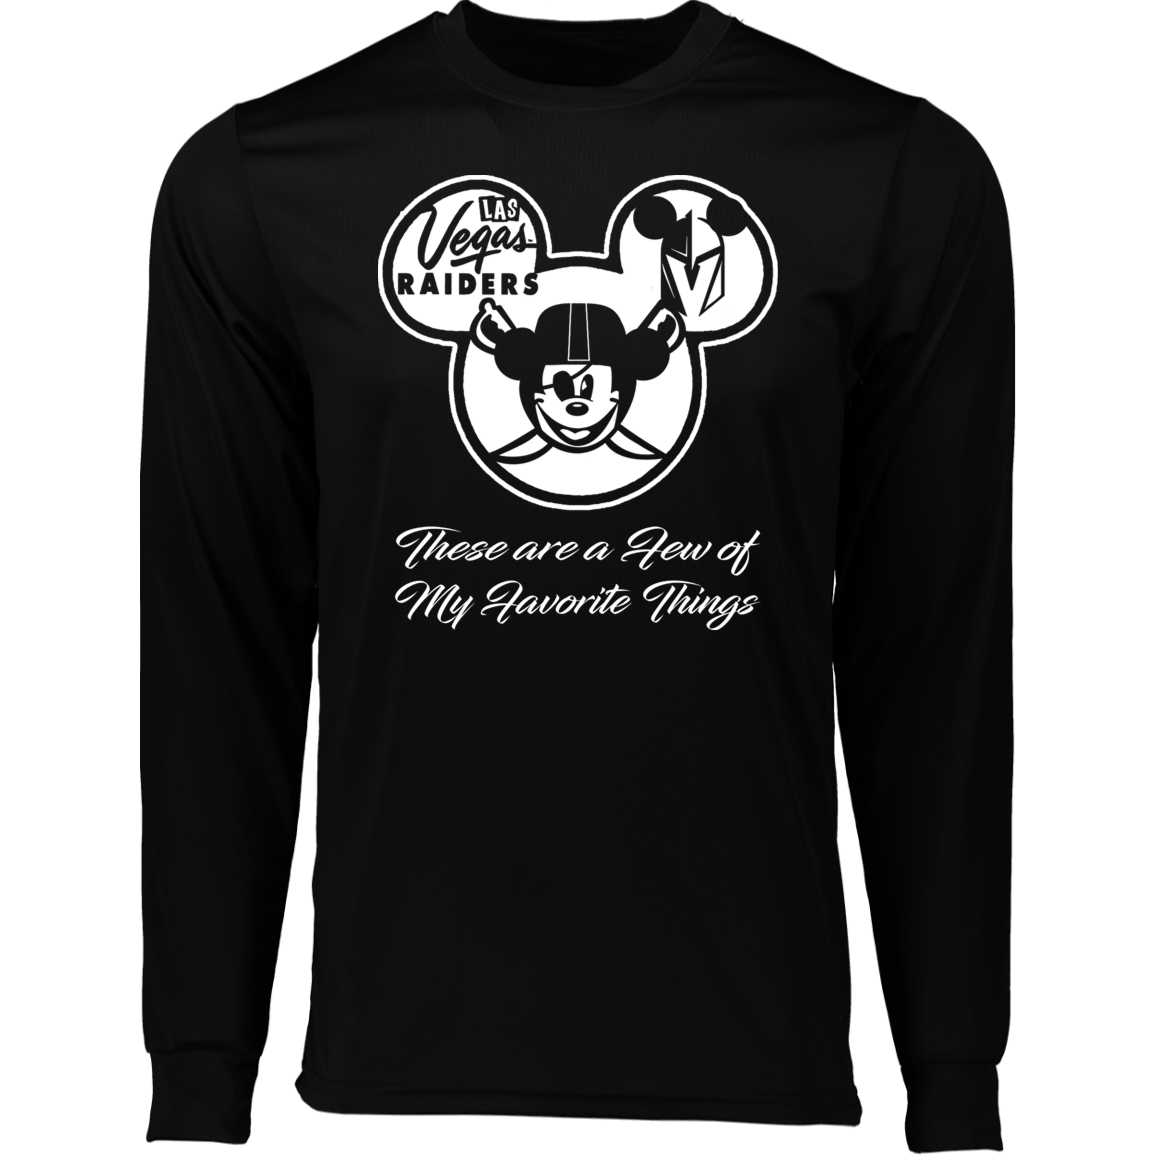 ArtichokeUSA Custom Design. Las Vegas Raiders & Mickey Mouse Mash Up. Fan Art. Parody. Long Sleeve Moisture-Wicking Tee